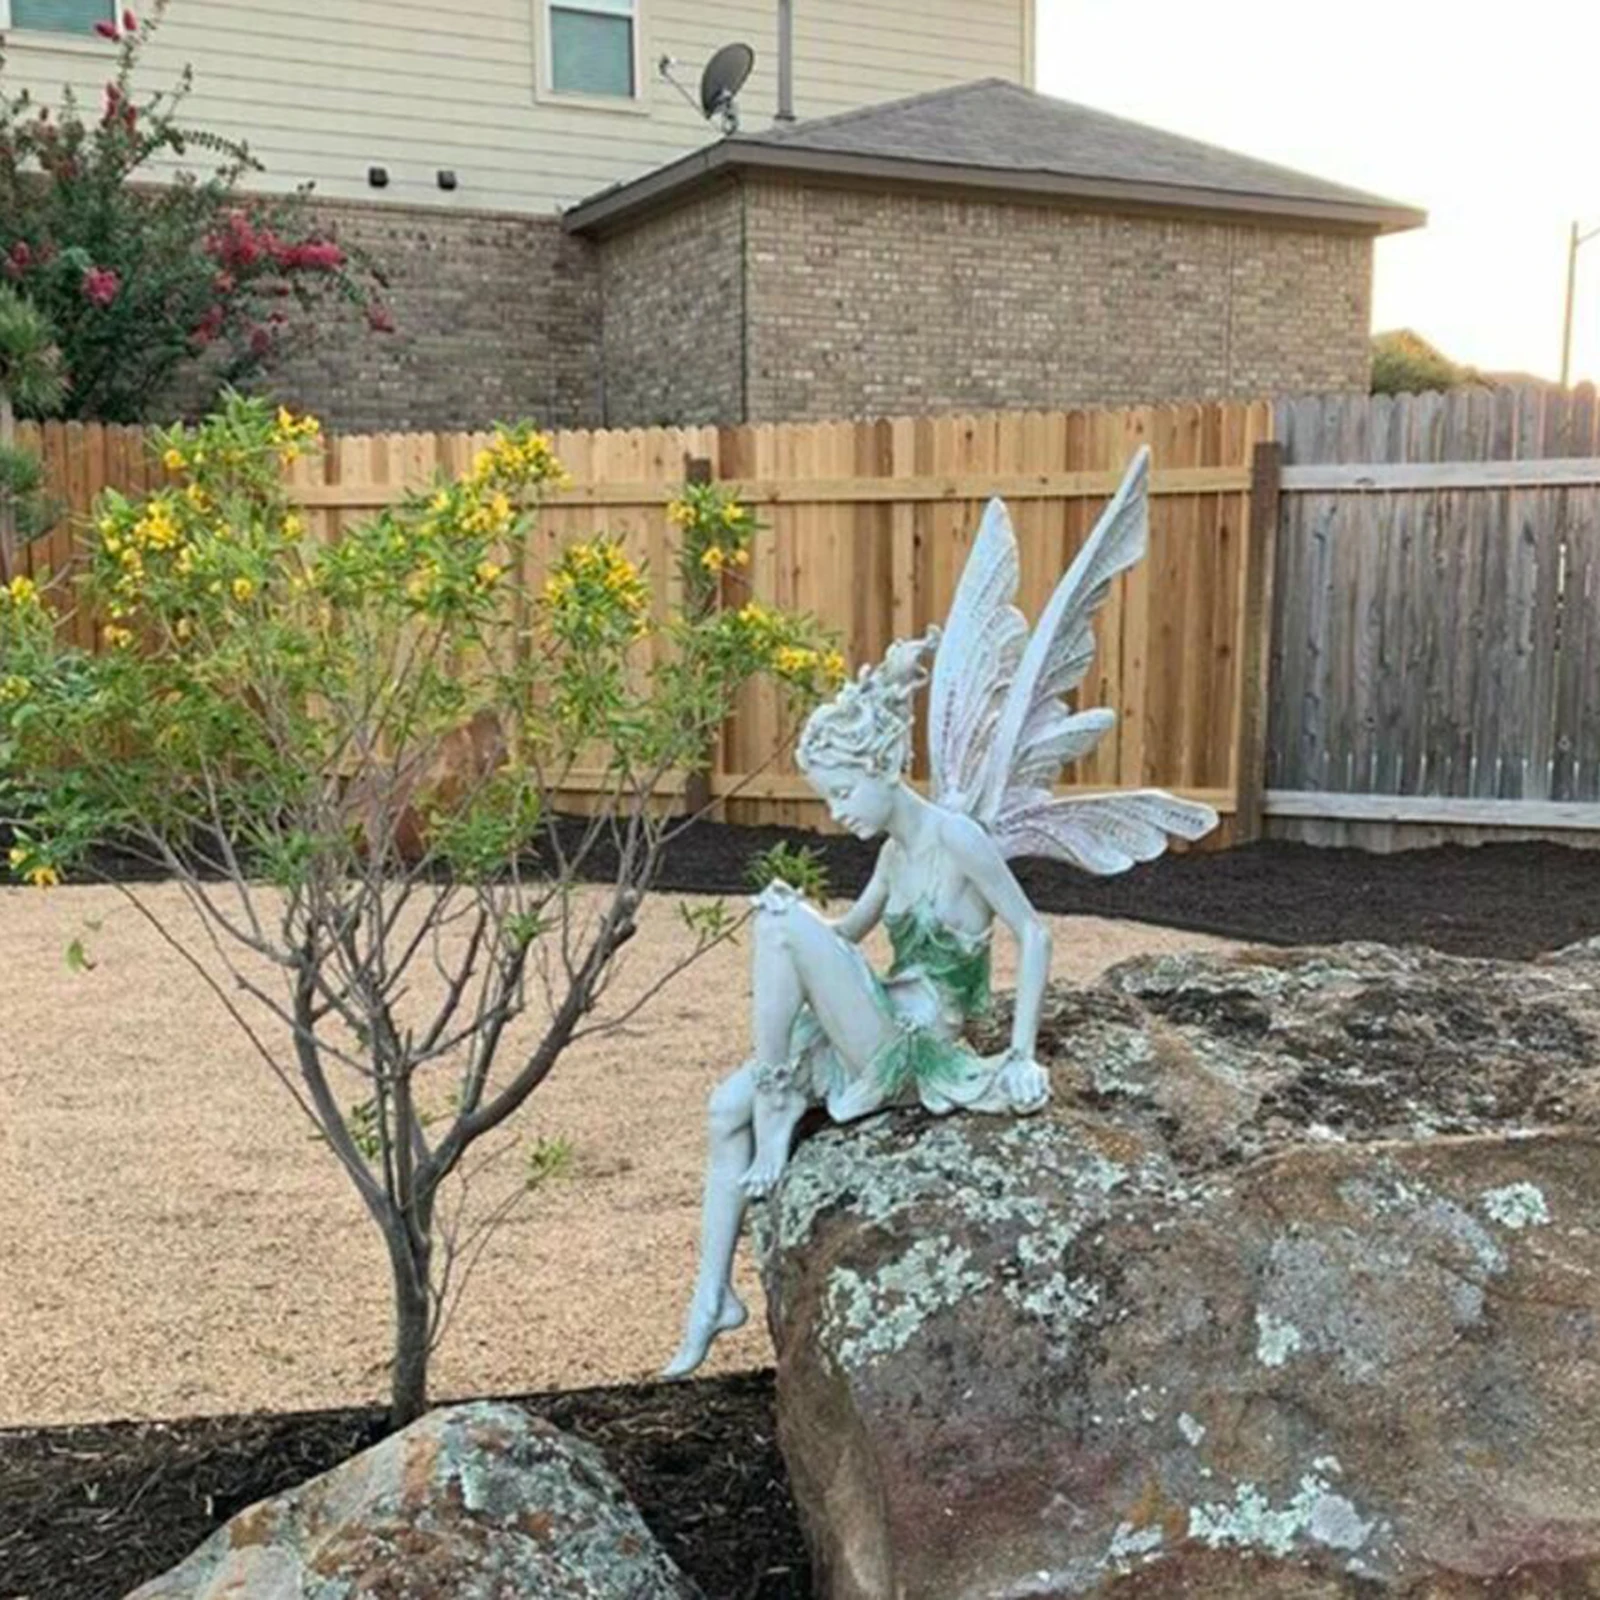 Sitting Fairy Statue Garden Ornament Resin Craft Landscaping Home Yard Decor AU